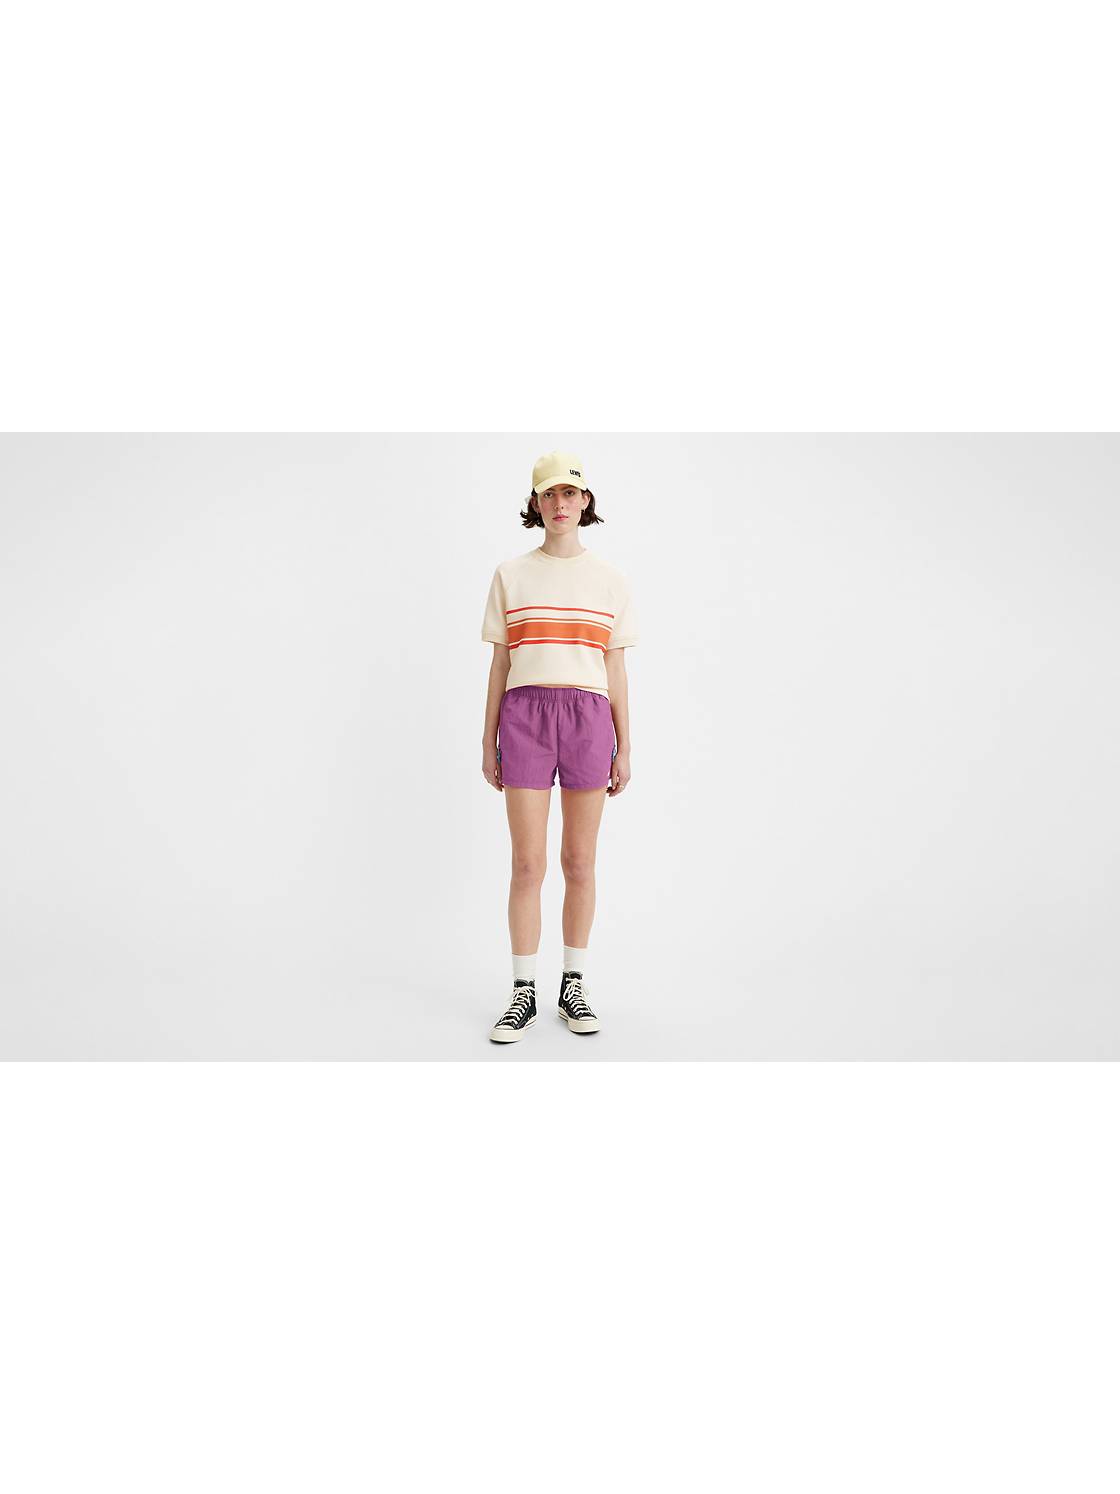 Sale Womens Purple Shorts - Bottoms, Clothing